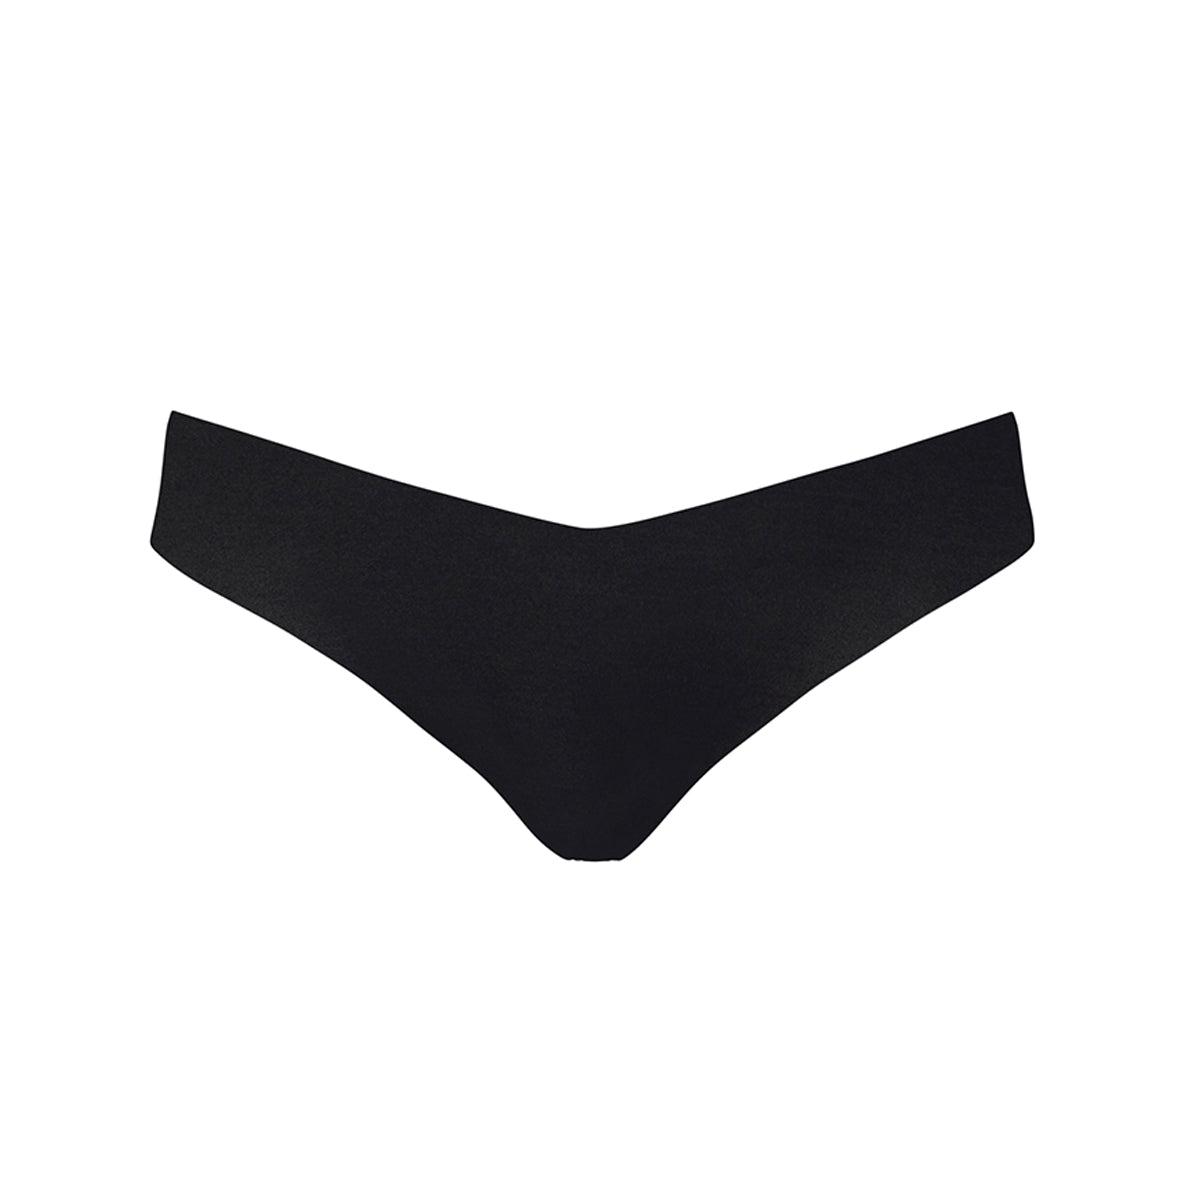 Men's Underwear for Women Best Seamless Underwear Black Lace G